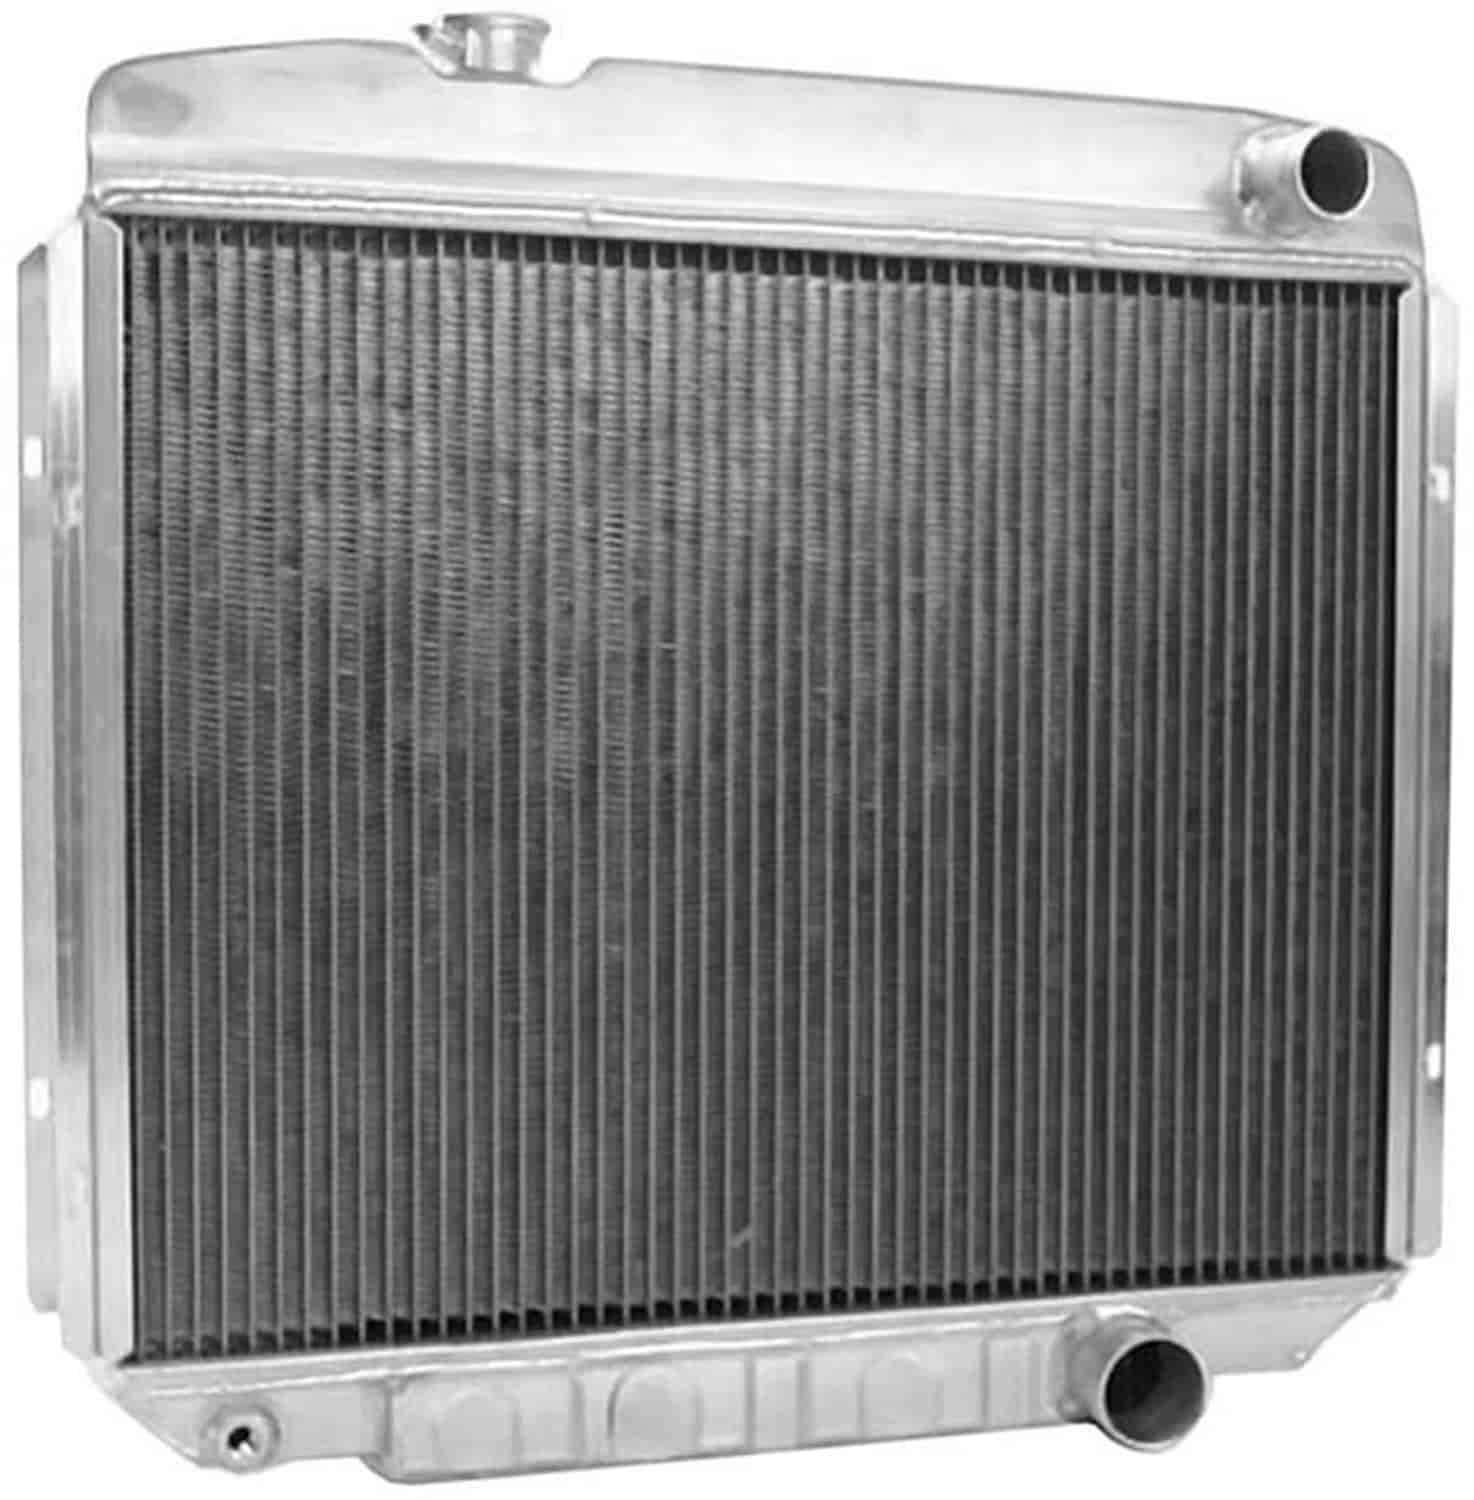 ExactFit Radiator for 1967-1969 Fairlane, Falcon, Torino, Galaxie, & LTD with Early Small Block